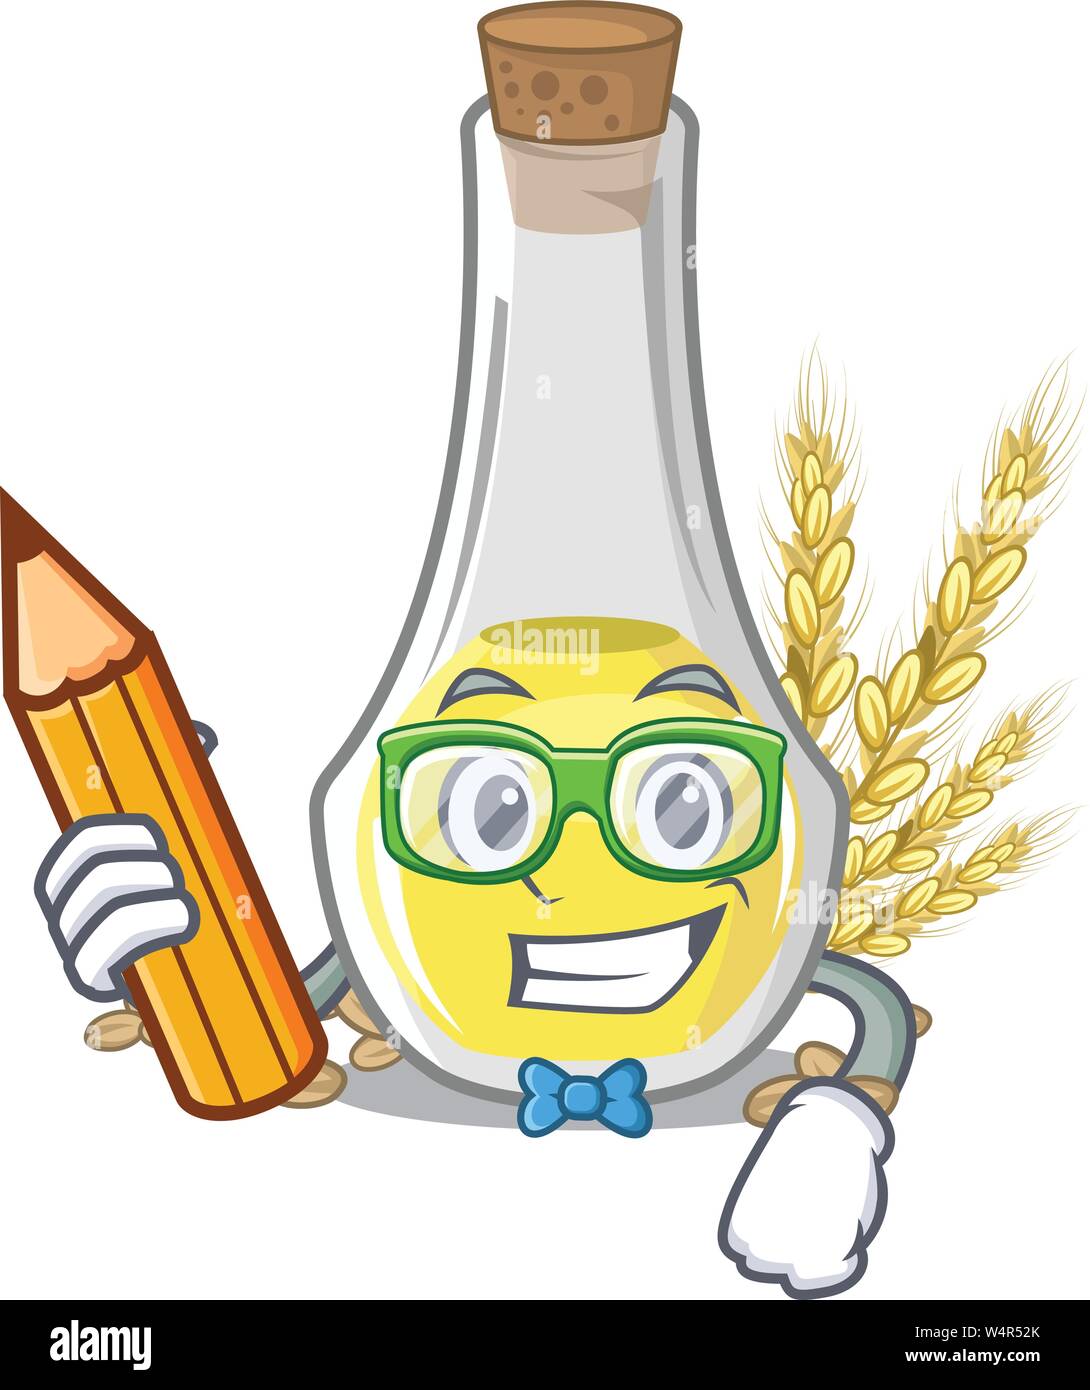 Student wheat germ oil the mascot shape vector illustration Stock Vector